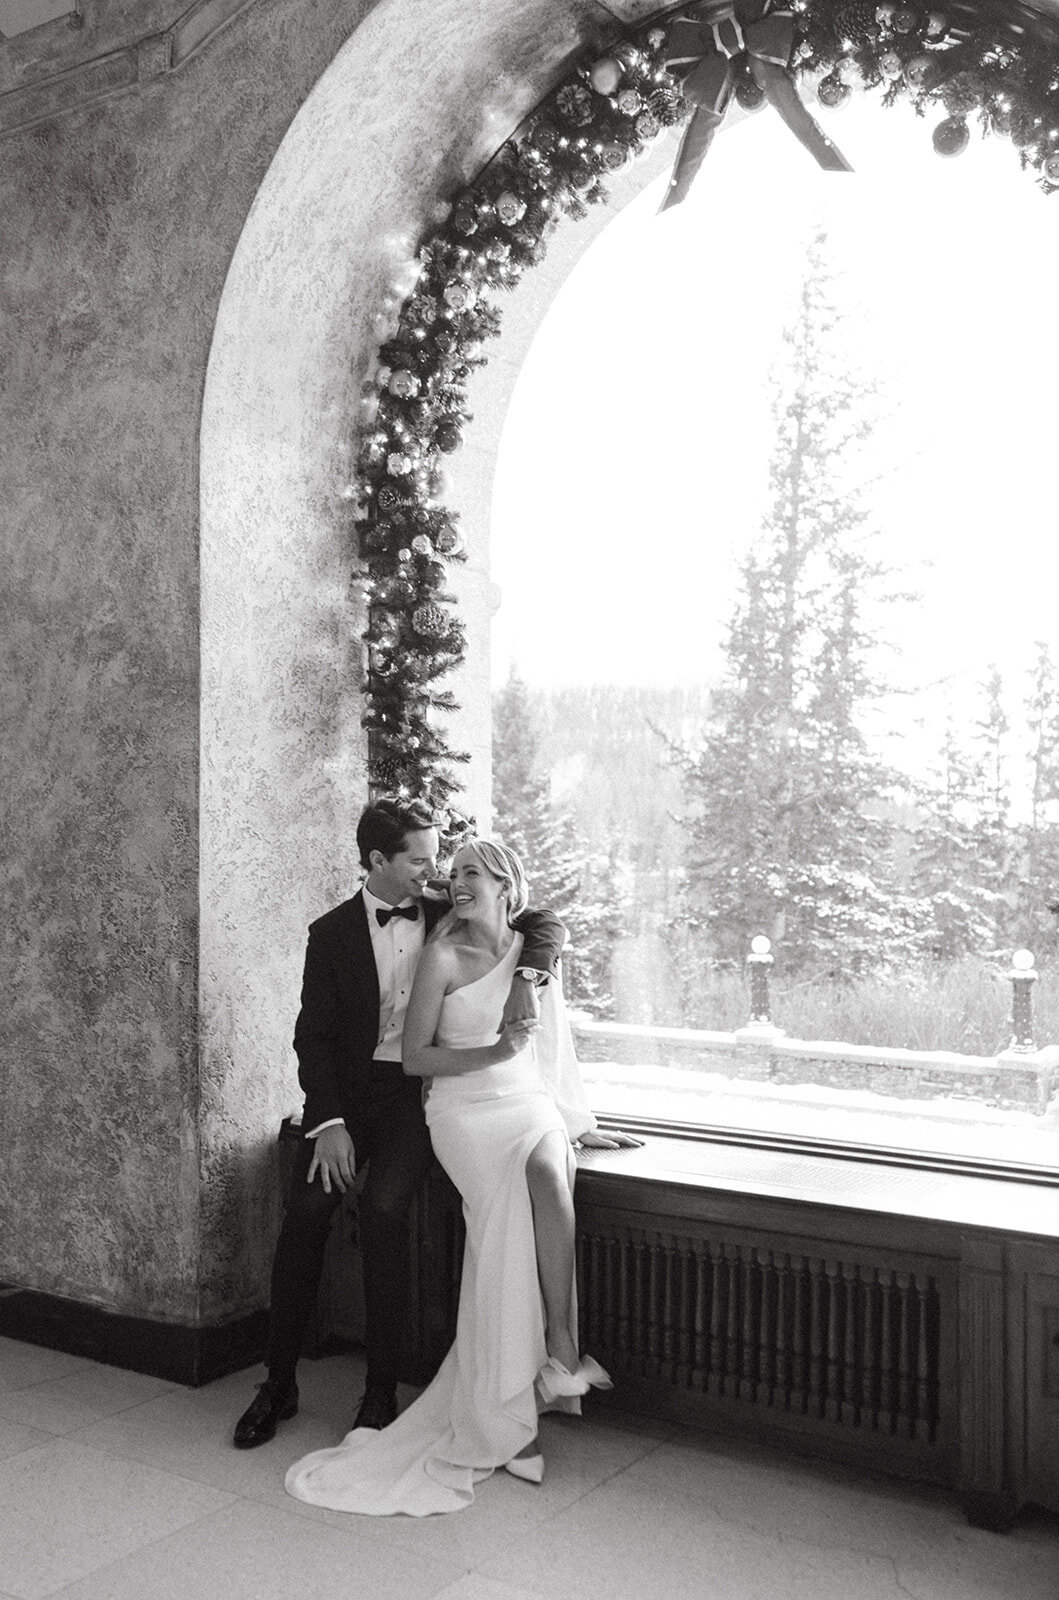 banff-wedding-planners-melissa-dawn-event-designs-bride-groom-window